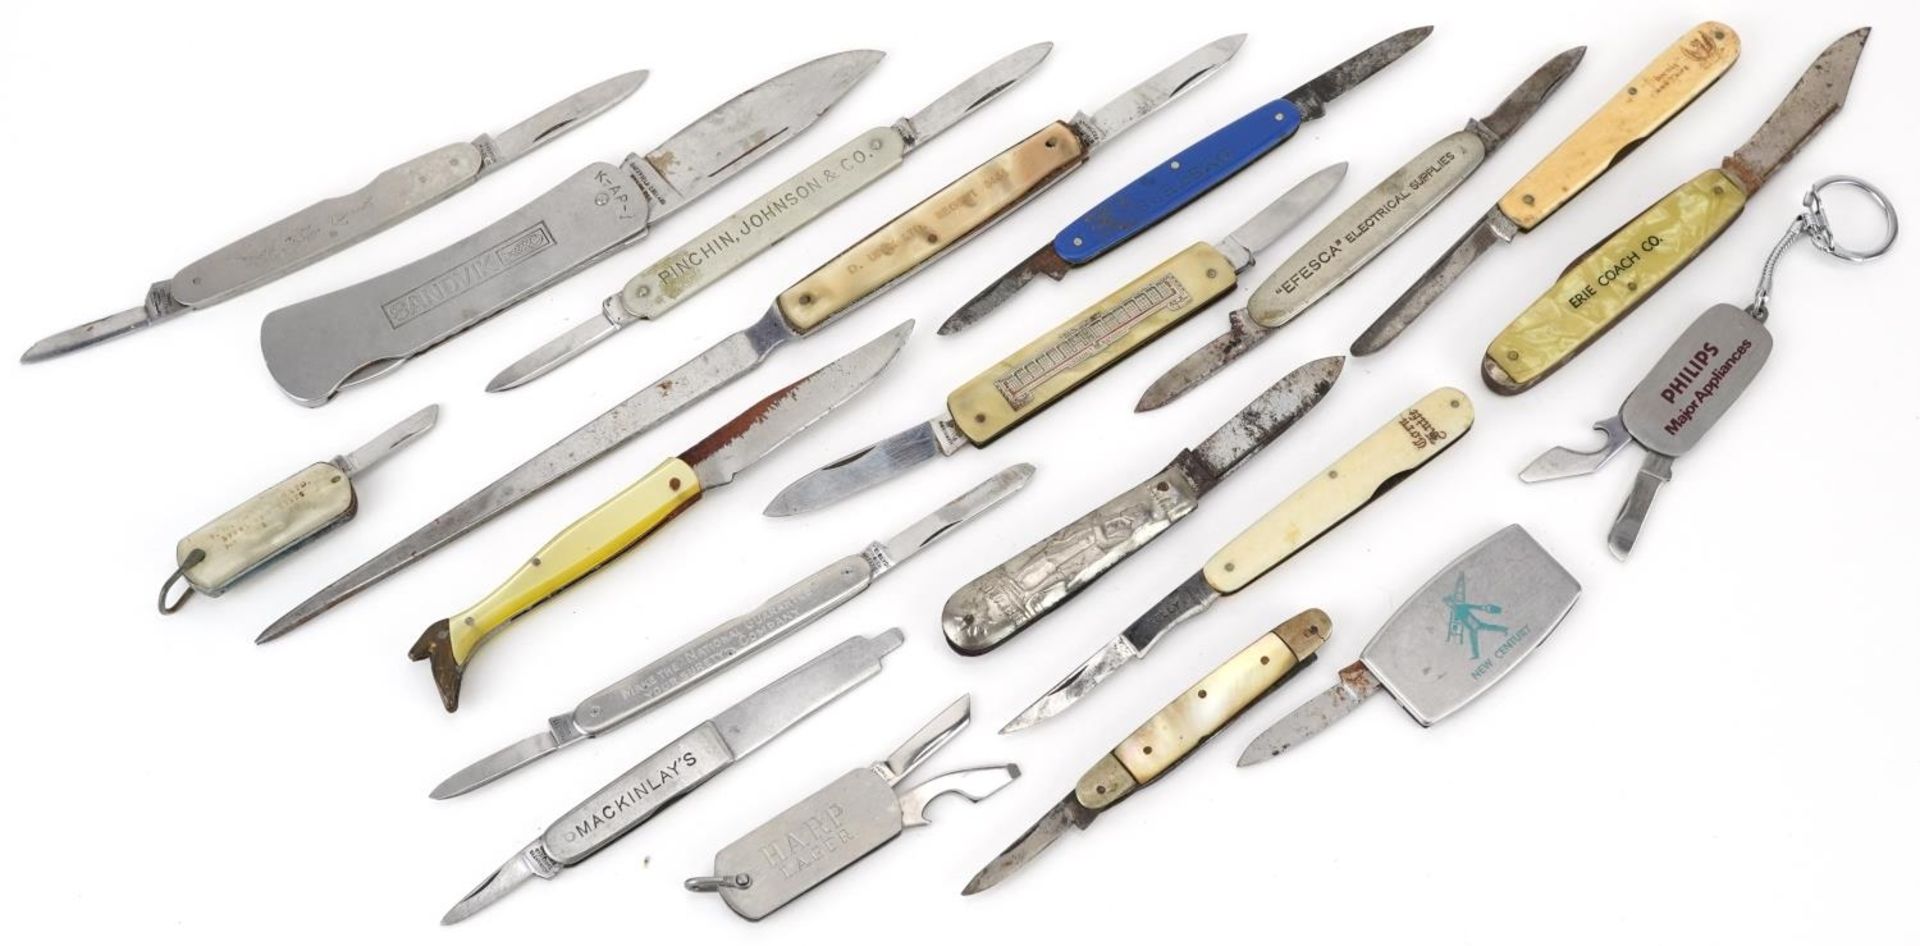 Collection of vintage advertising penknives and pocket tools, including Hoover Ltd, Sandvik, Harp